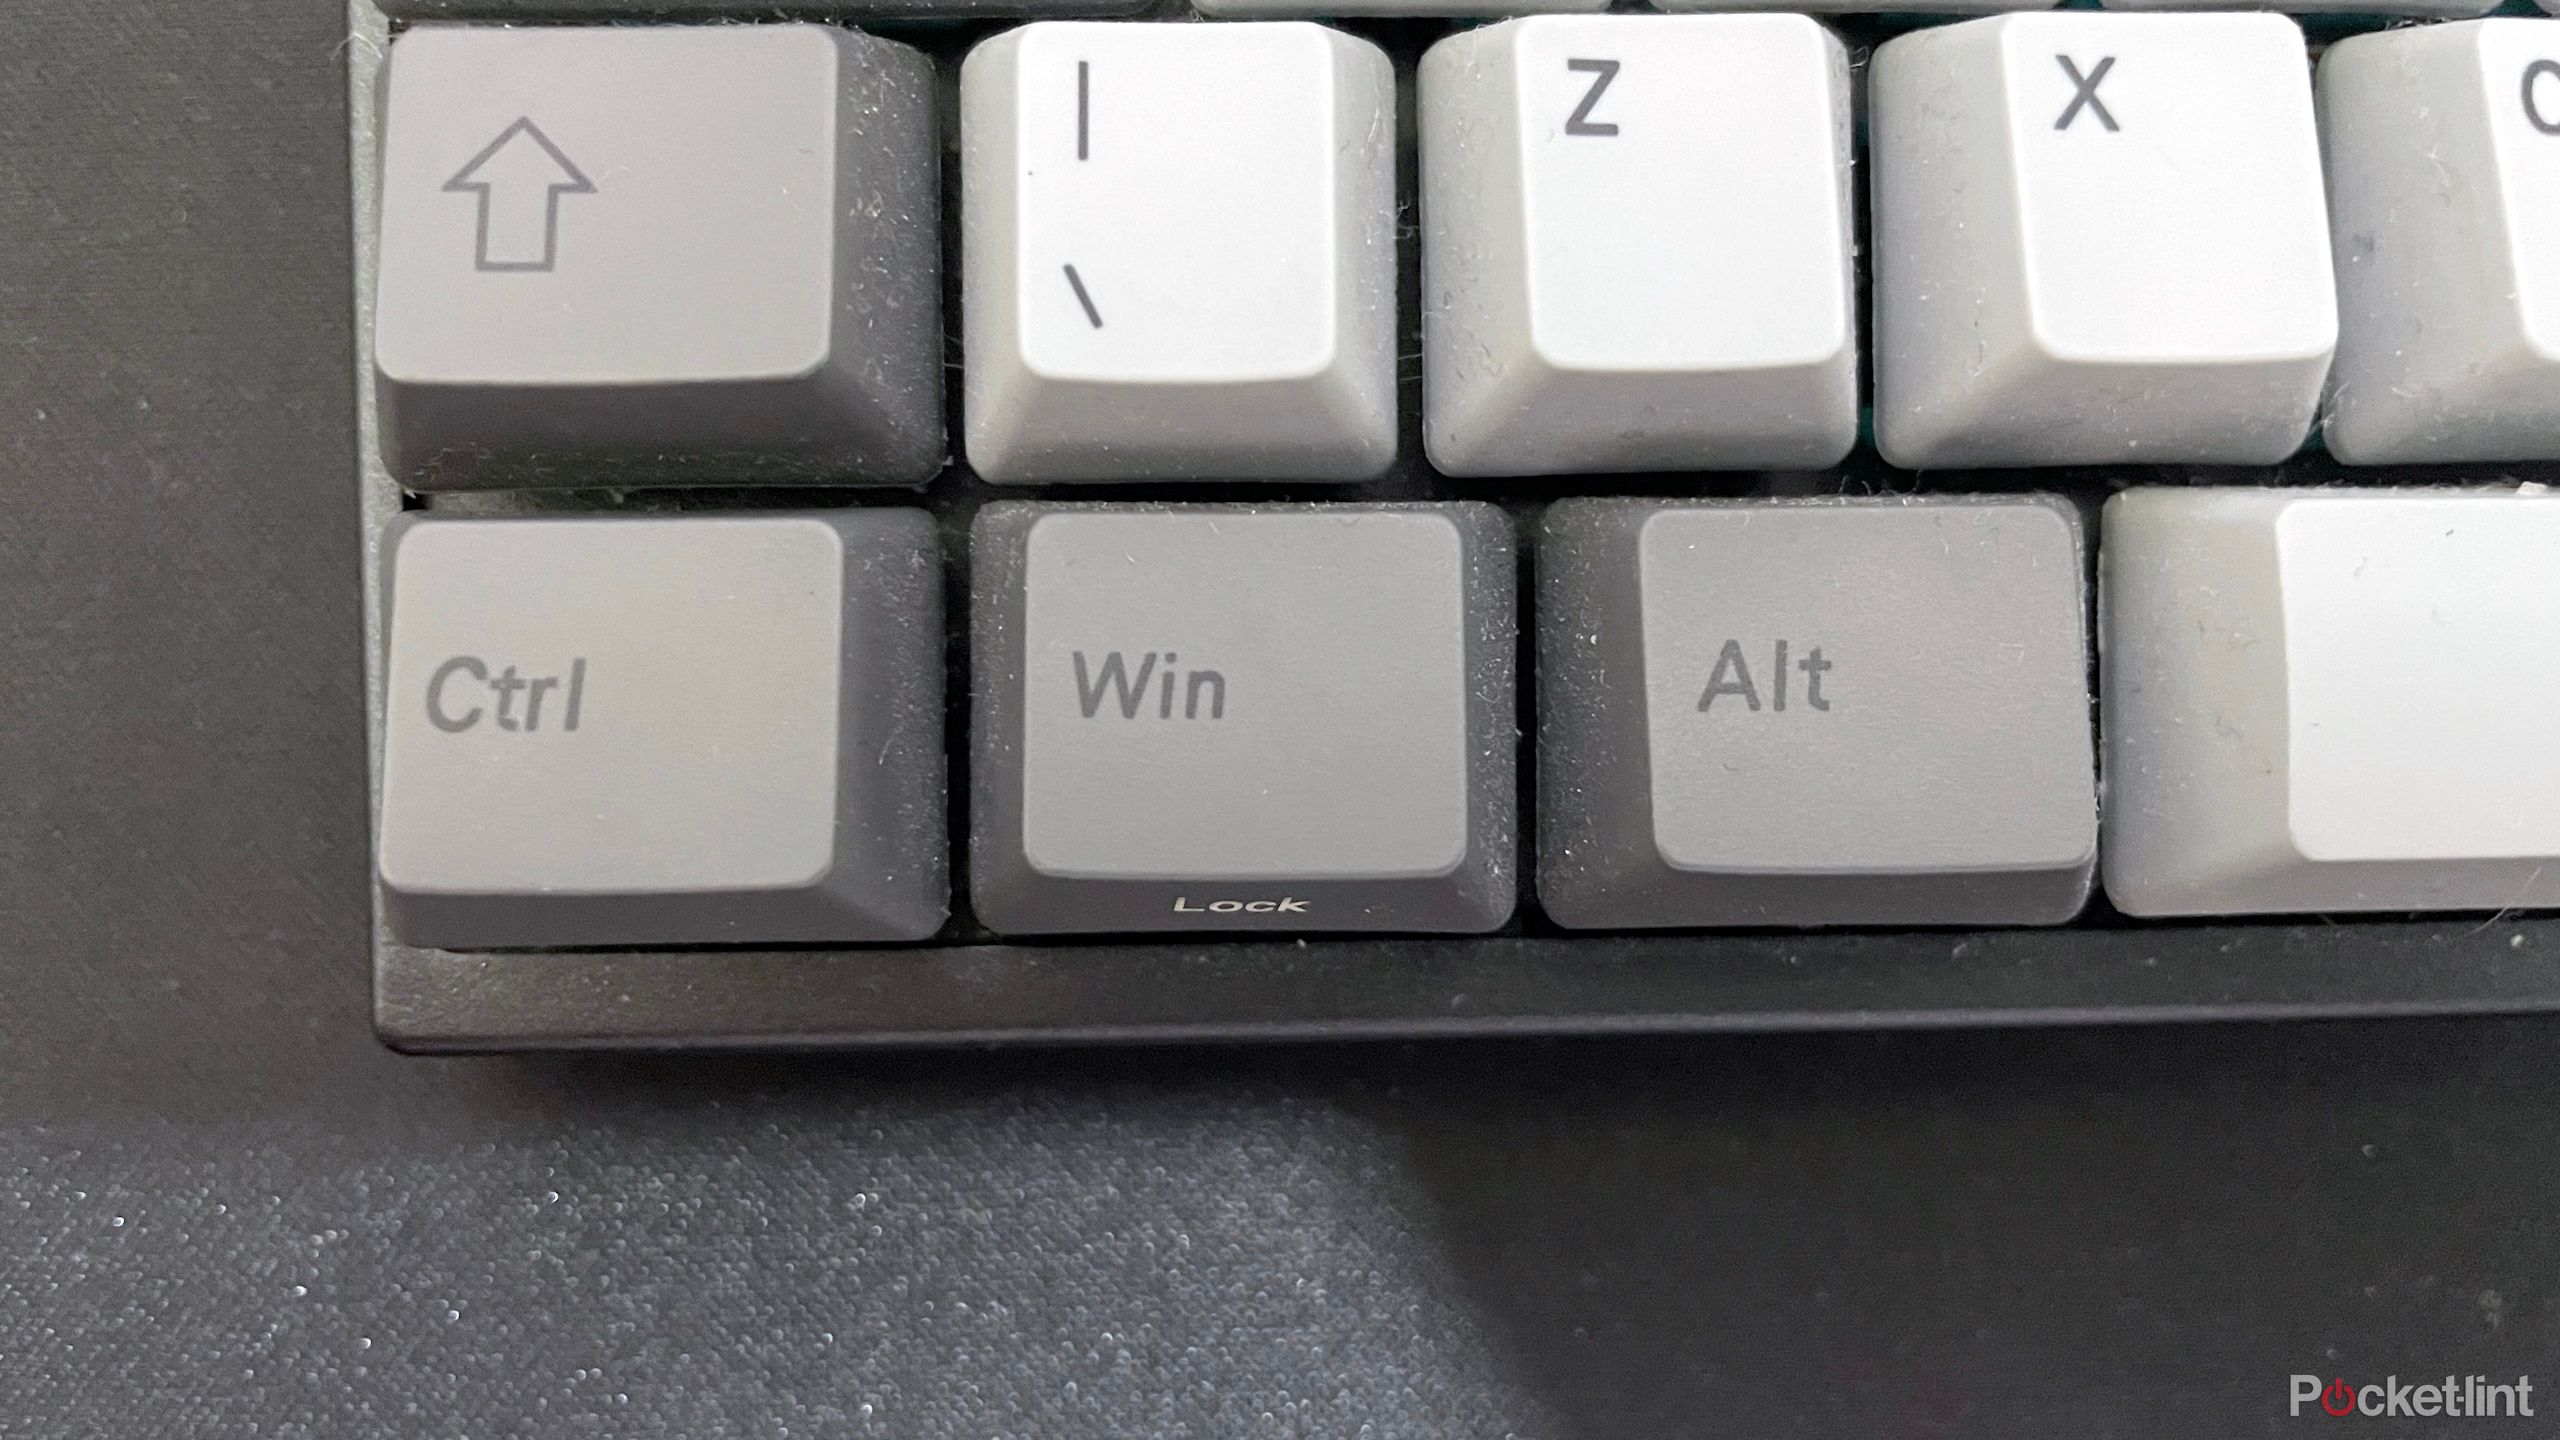 Varmilo keyboard showing Windows key